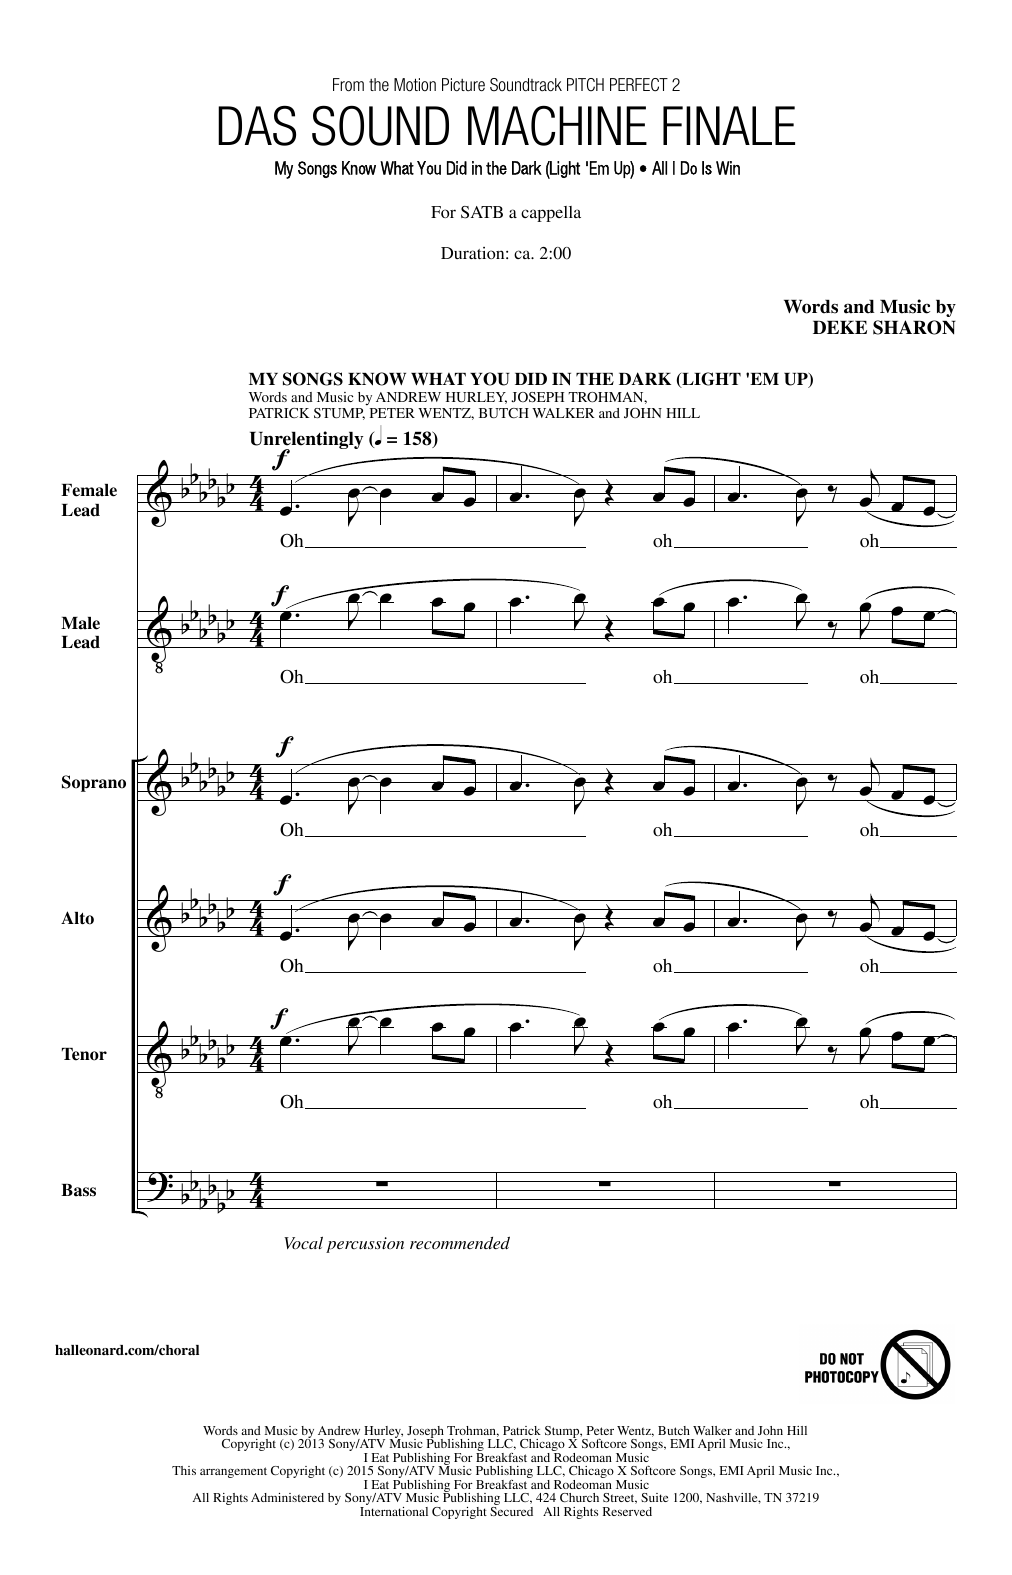 Deke Sharon Das Sound Machine Finale Sheet Music Notes & Chords for SATB - Download or Print PDF